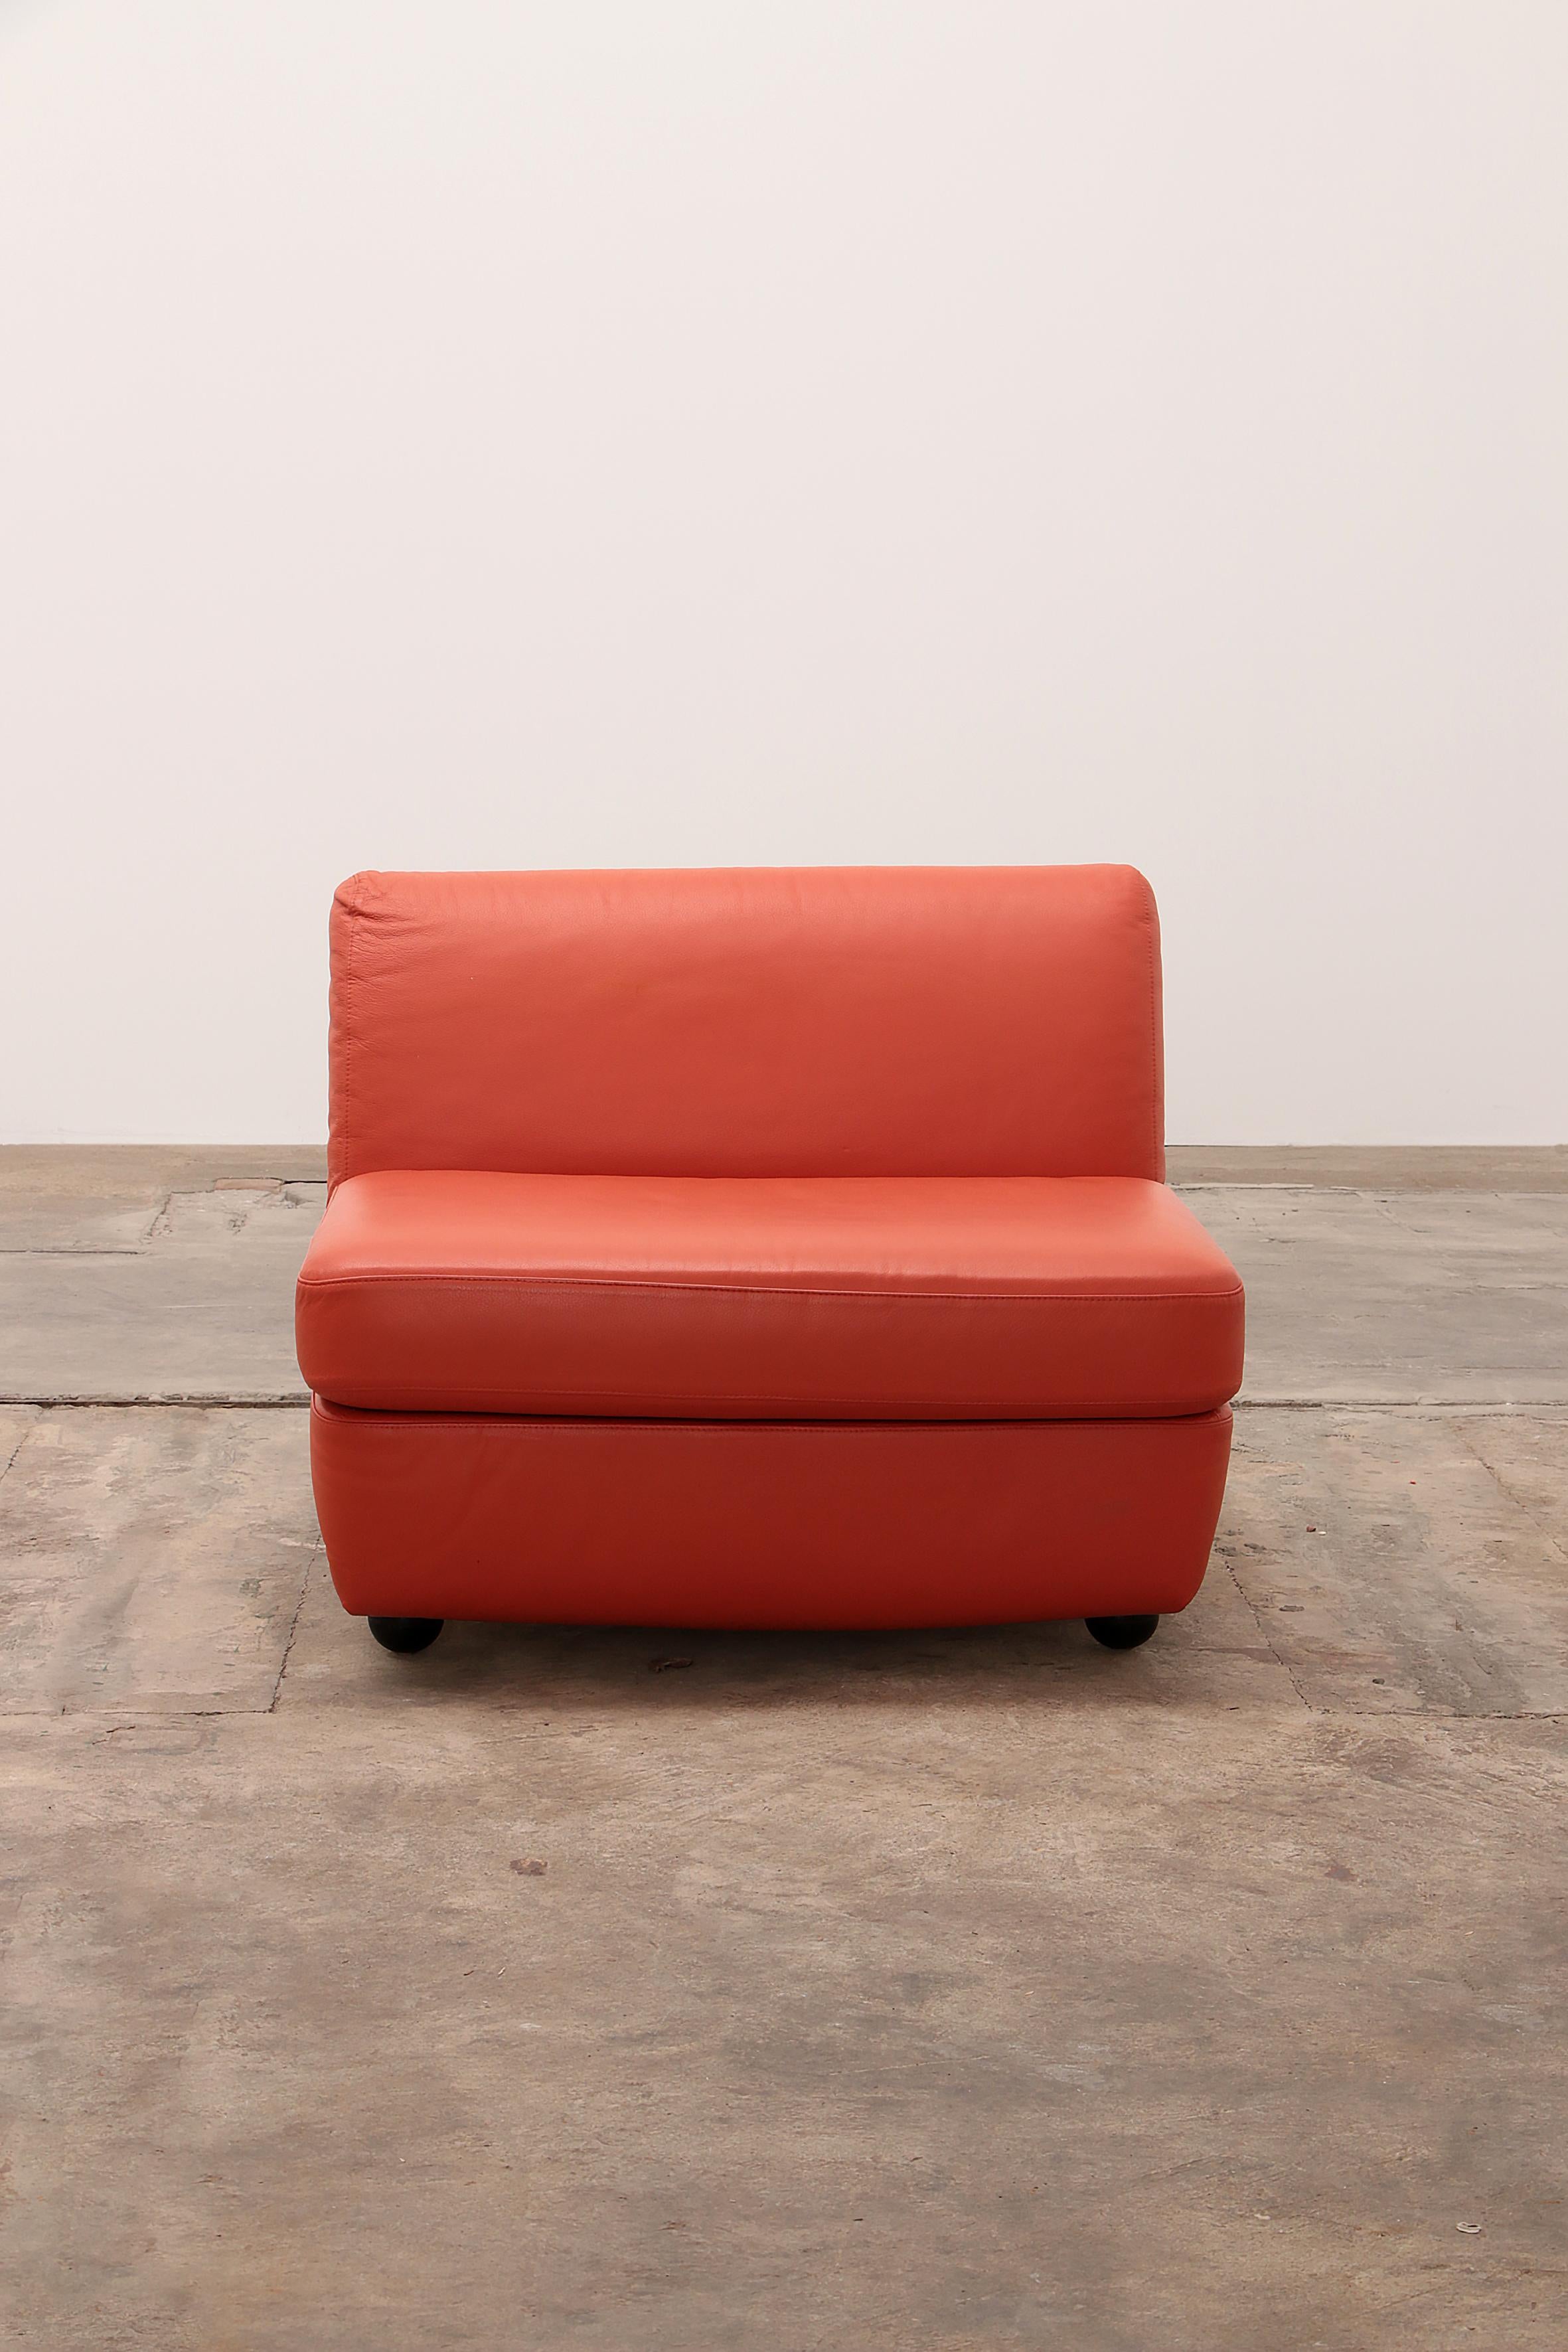 Mario Bellini Amanta Modular Sofa in Orange Leather for C&B Italy, 1960s For Sale 4